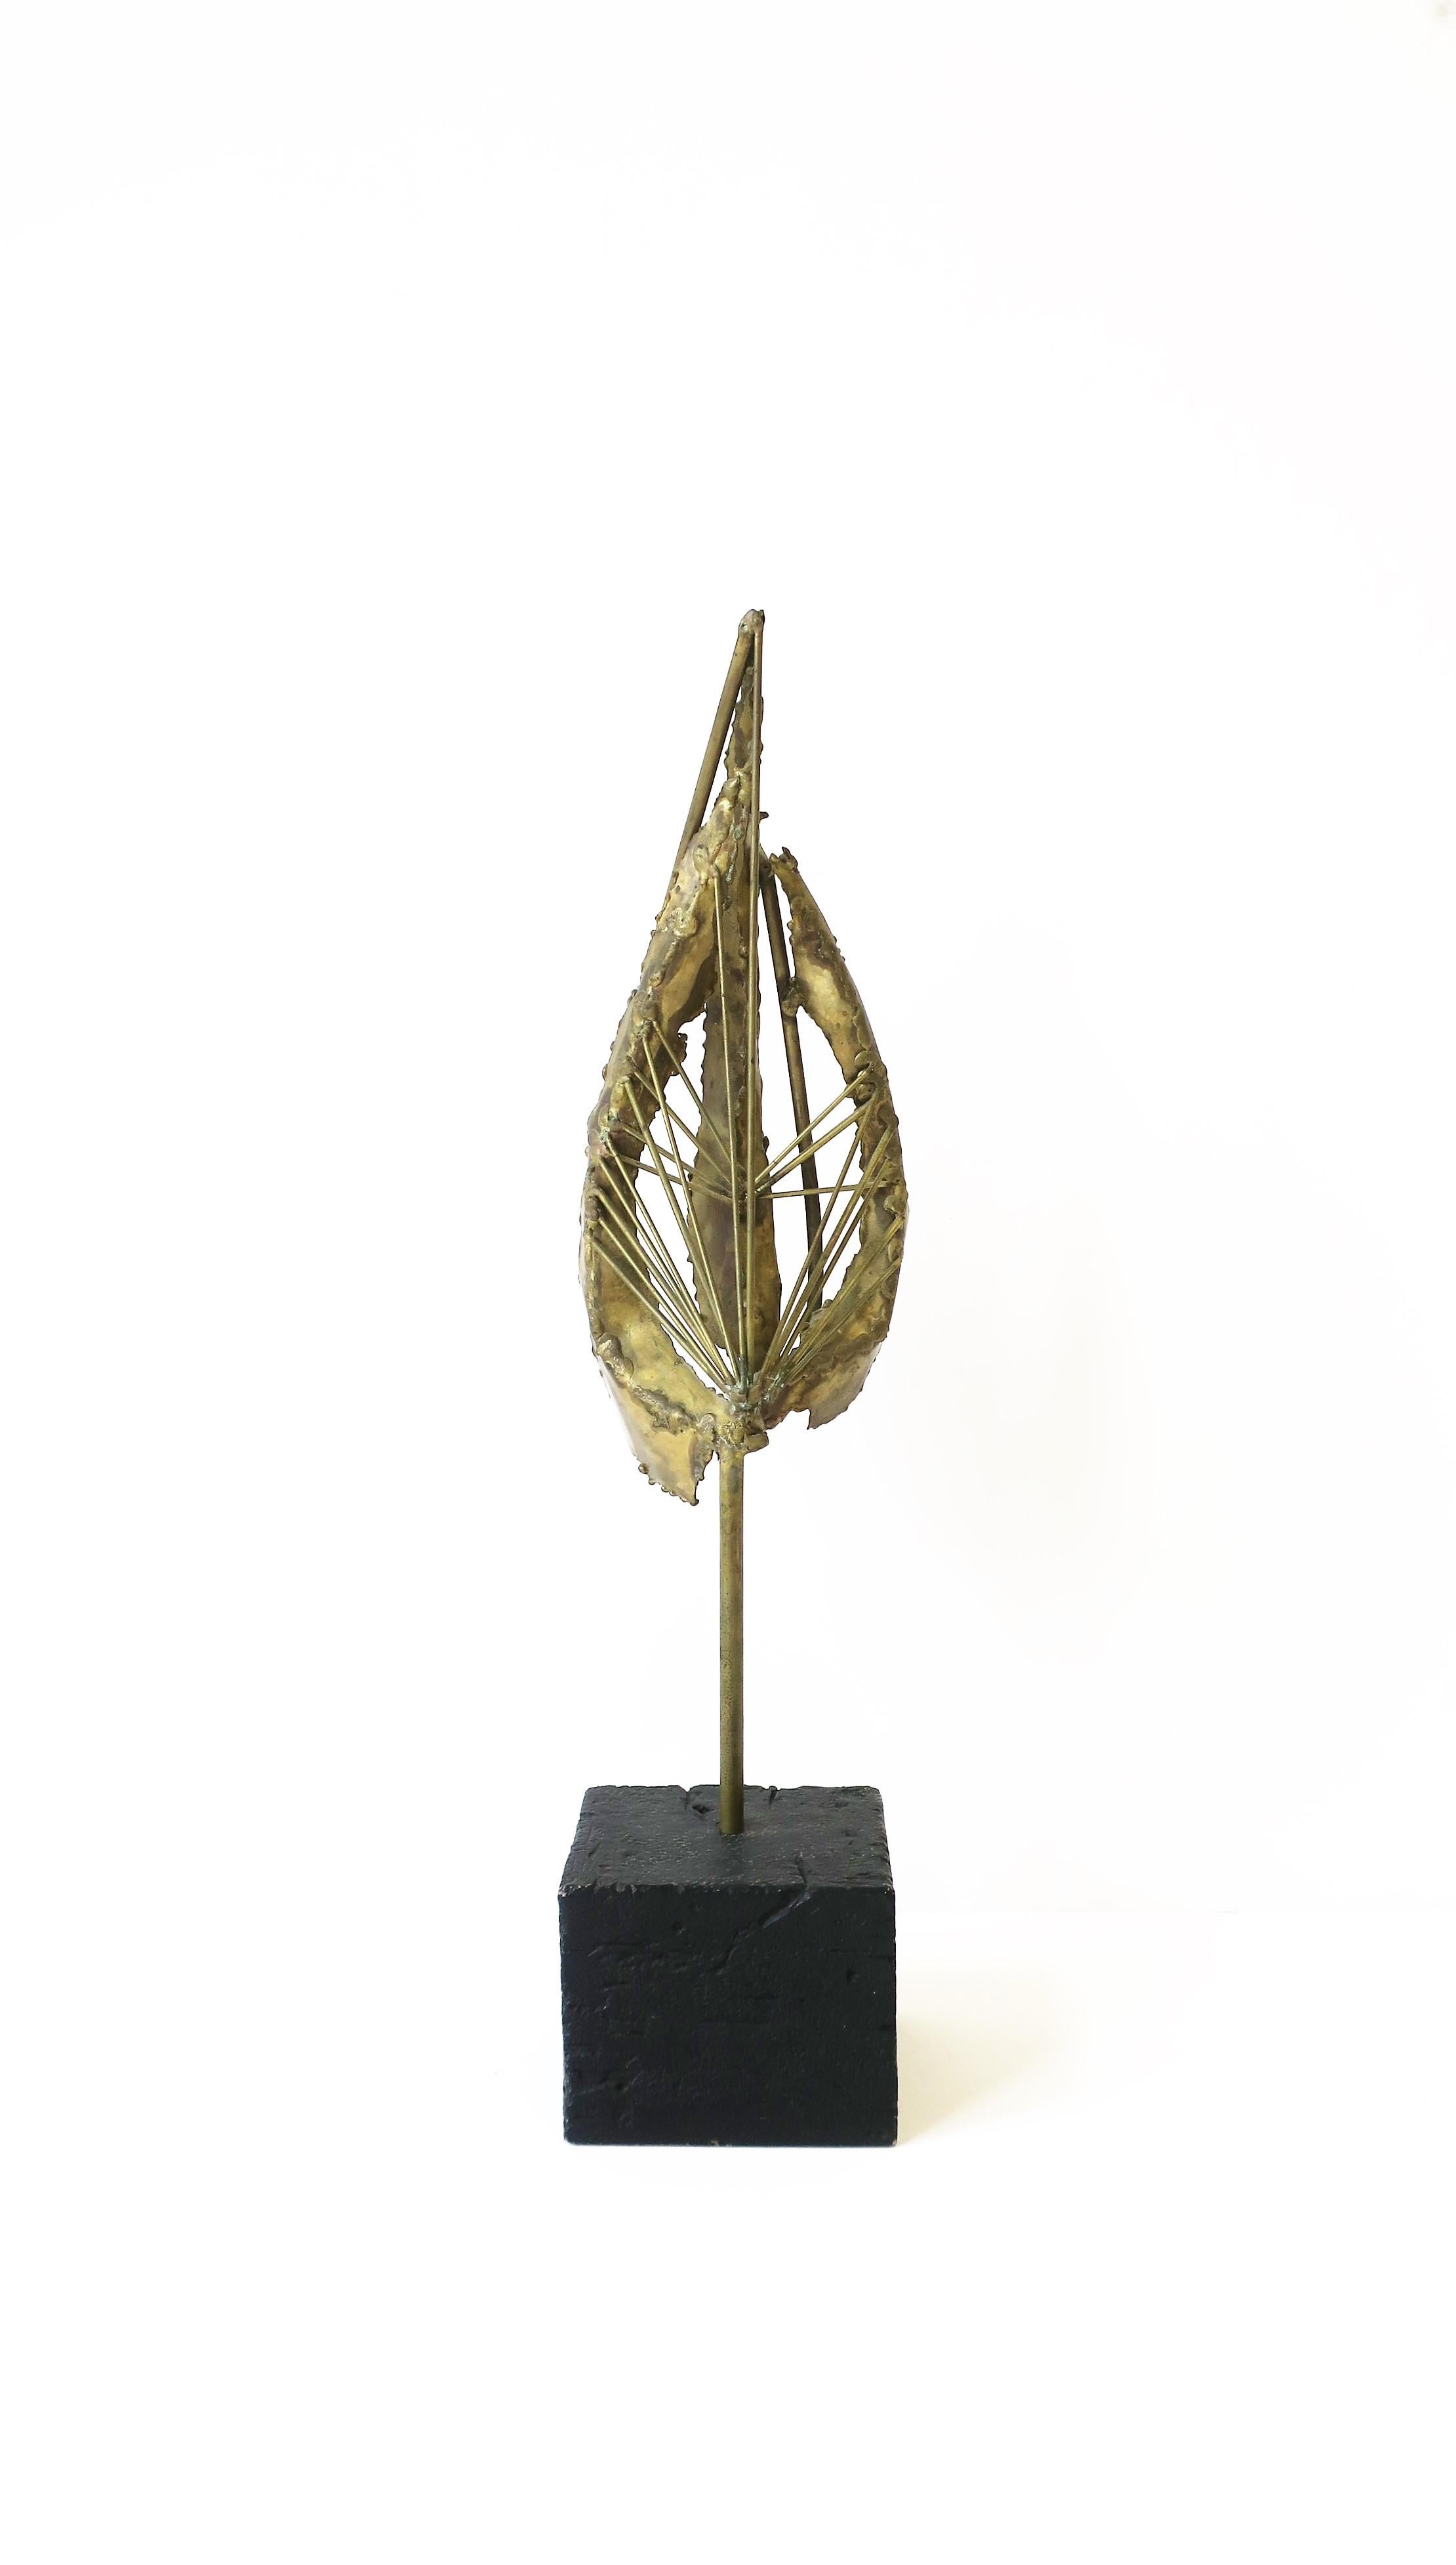 Midcentury Modern Brass Sculpture, circa 1960s For Sale 9